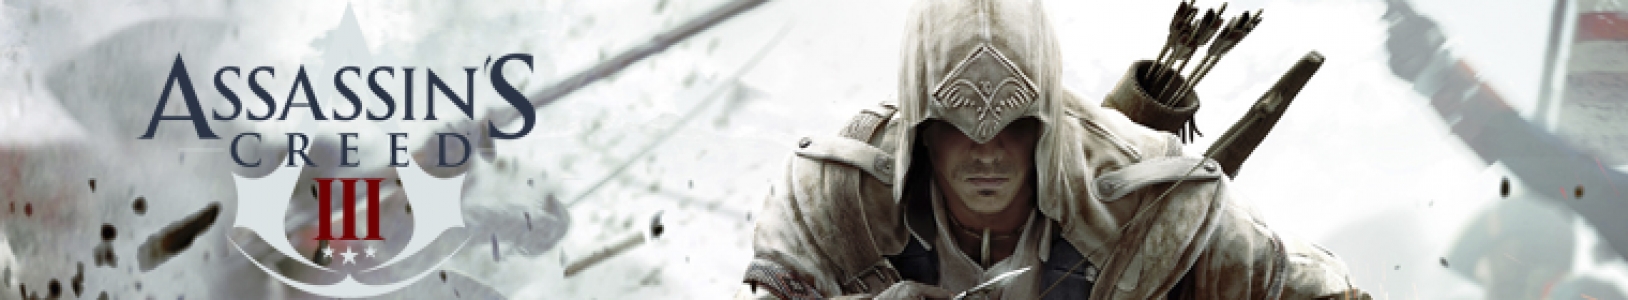 Assassin's Creed III banner